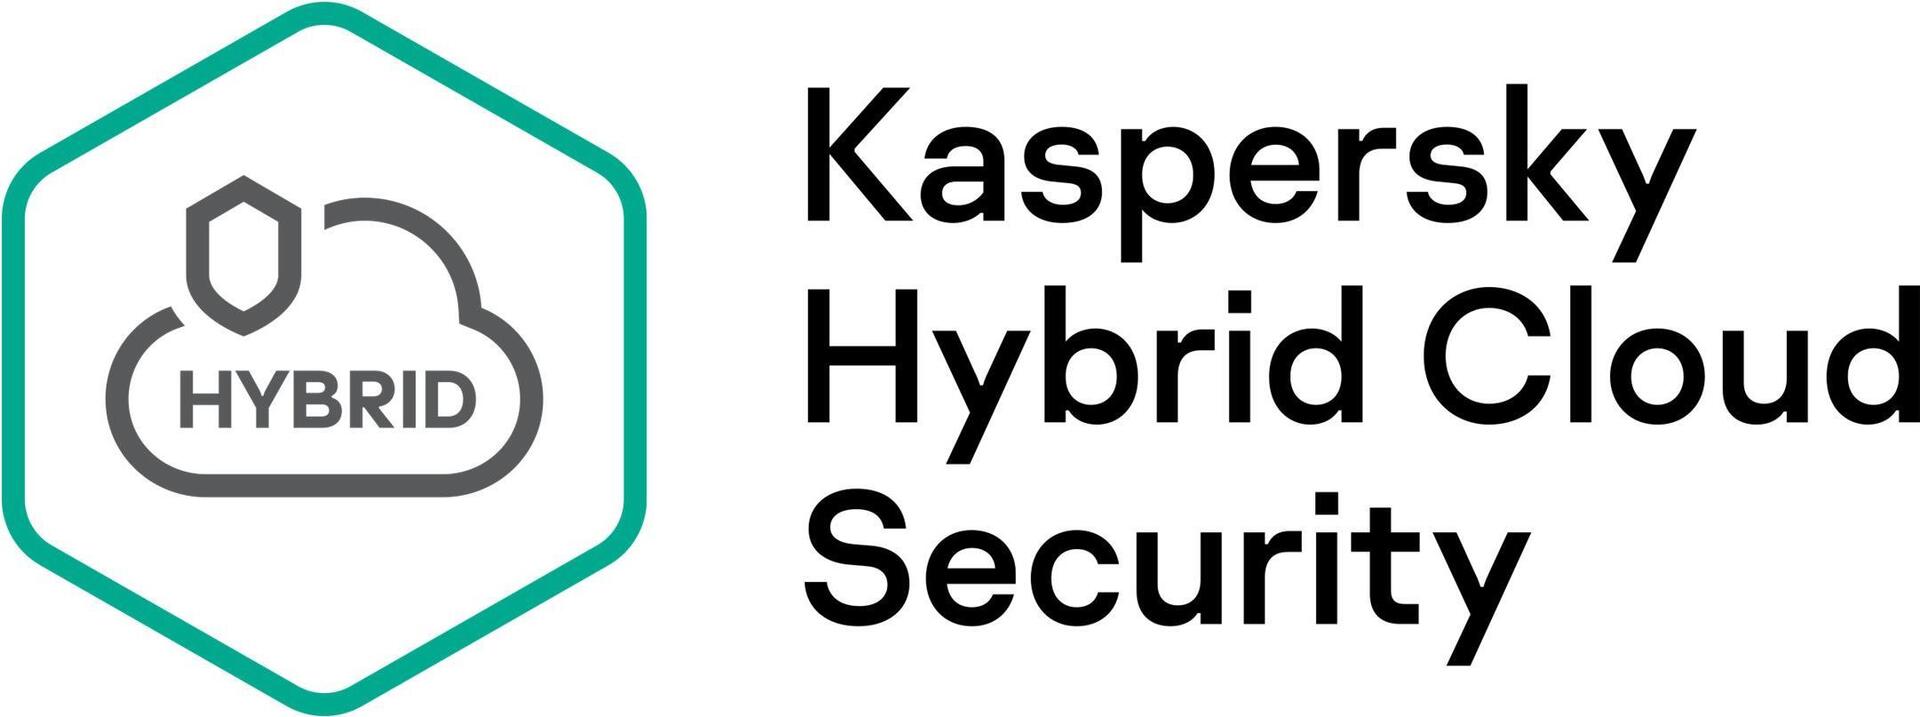 Kaspersky Hybrid Cloud Security Enterprise CPU European Edi. 4 - CPU 3-Year Renewal License (KL4553XADTR)